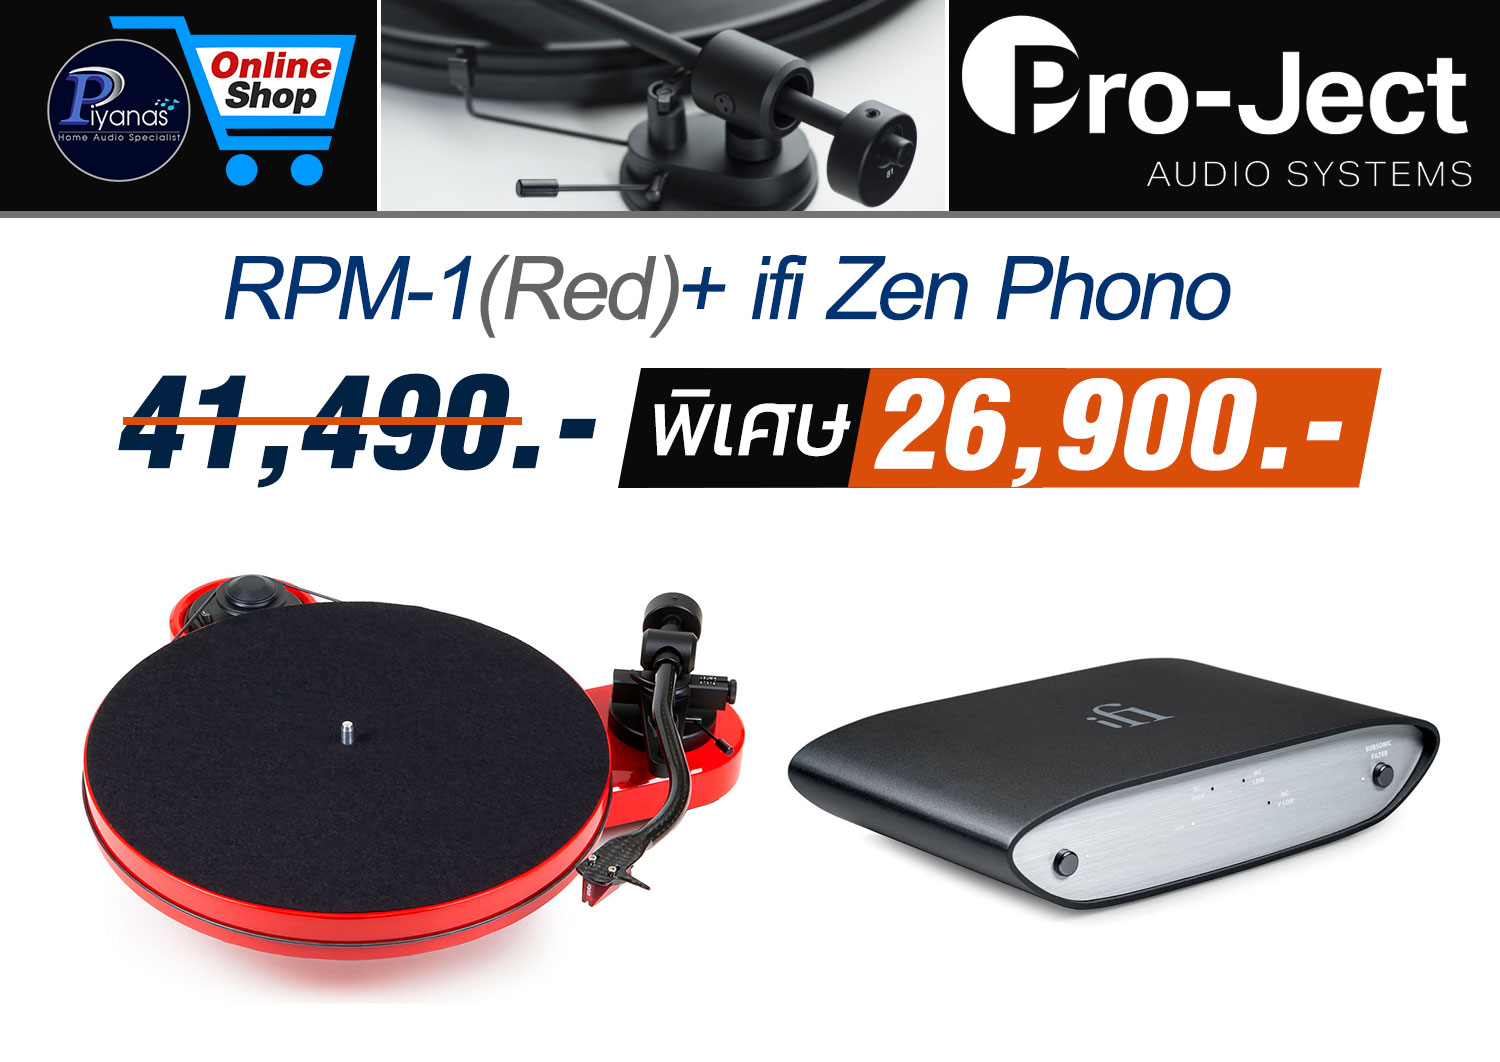 RPM-1 Carbon (Red)
+ ifi Zen Phono